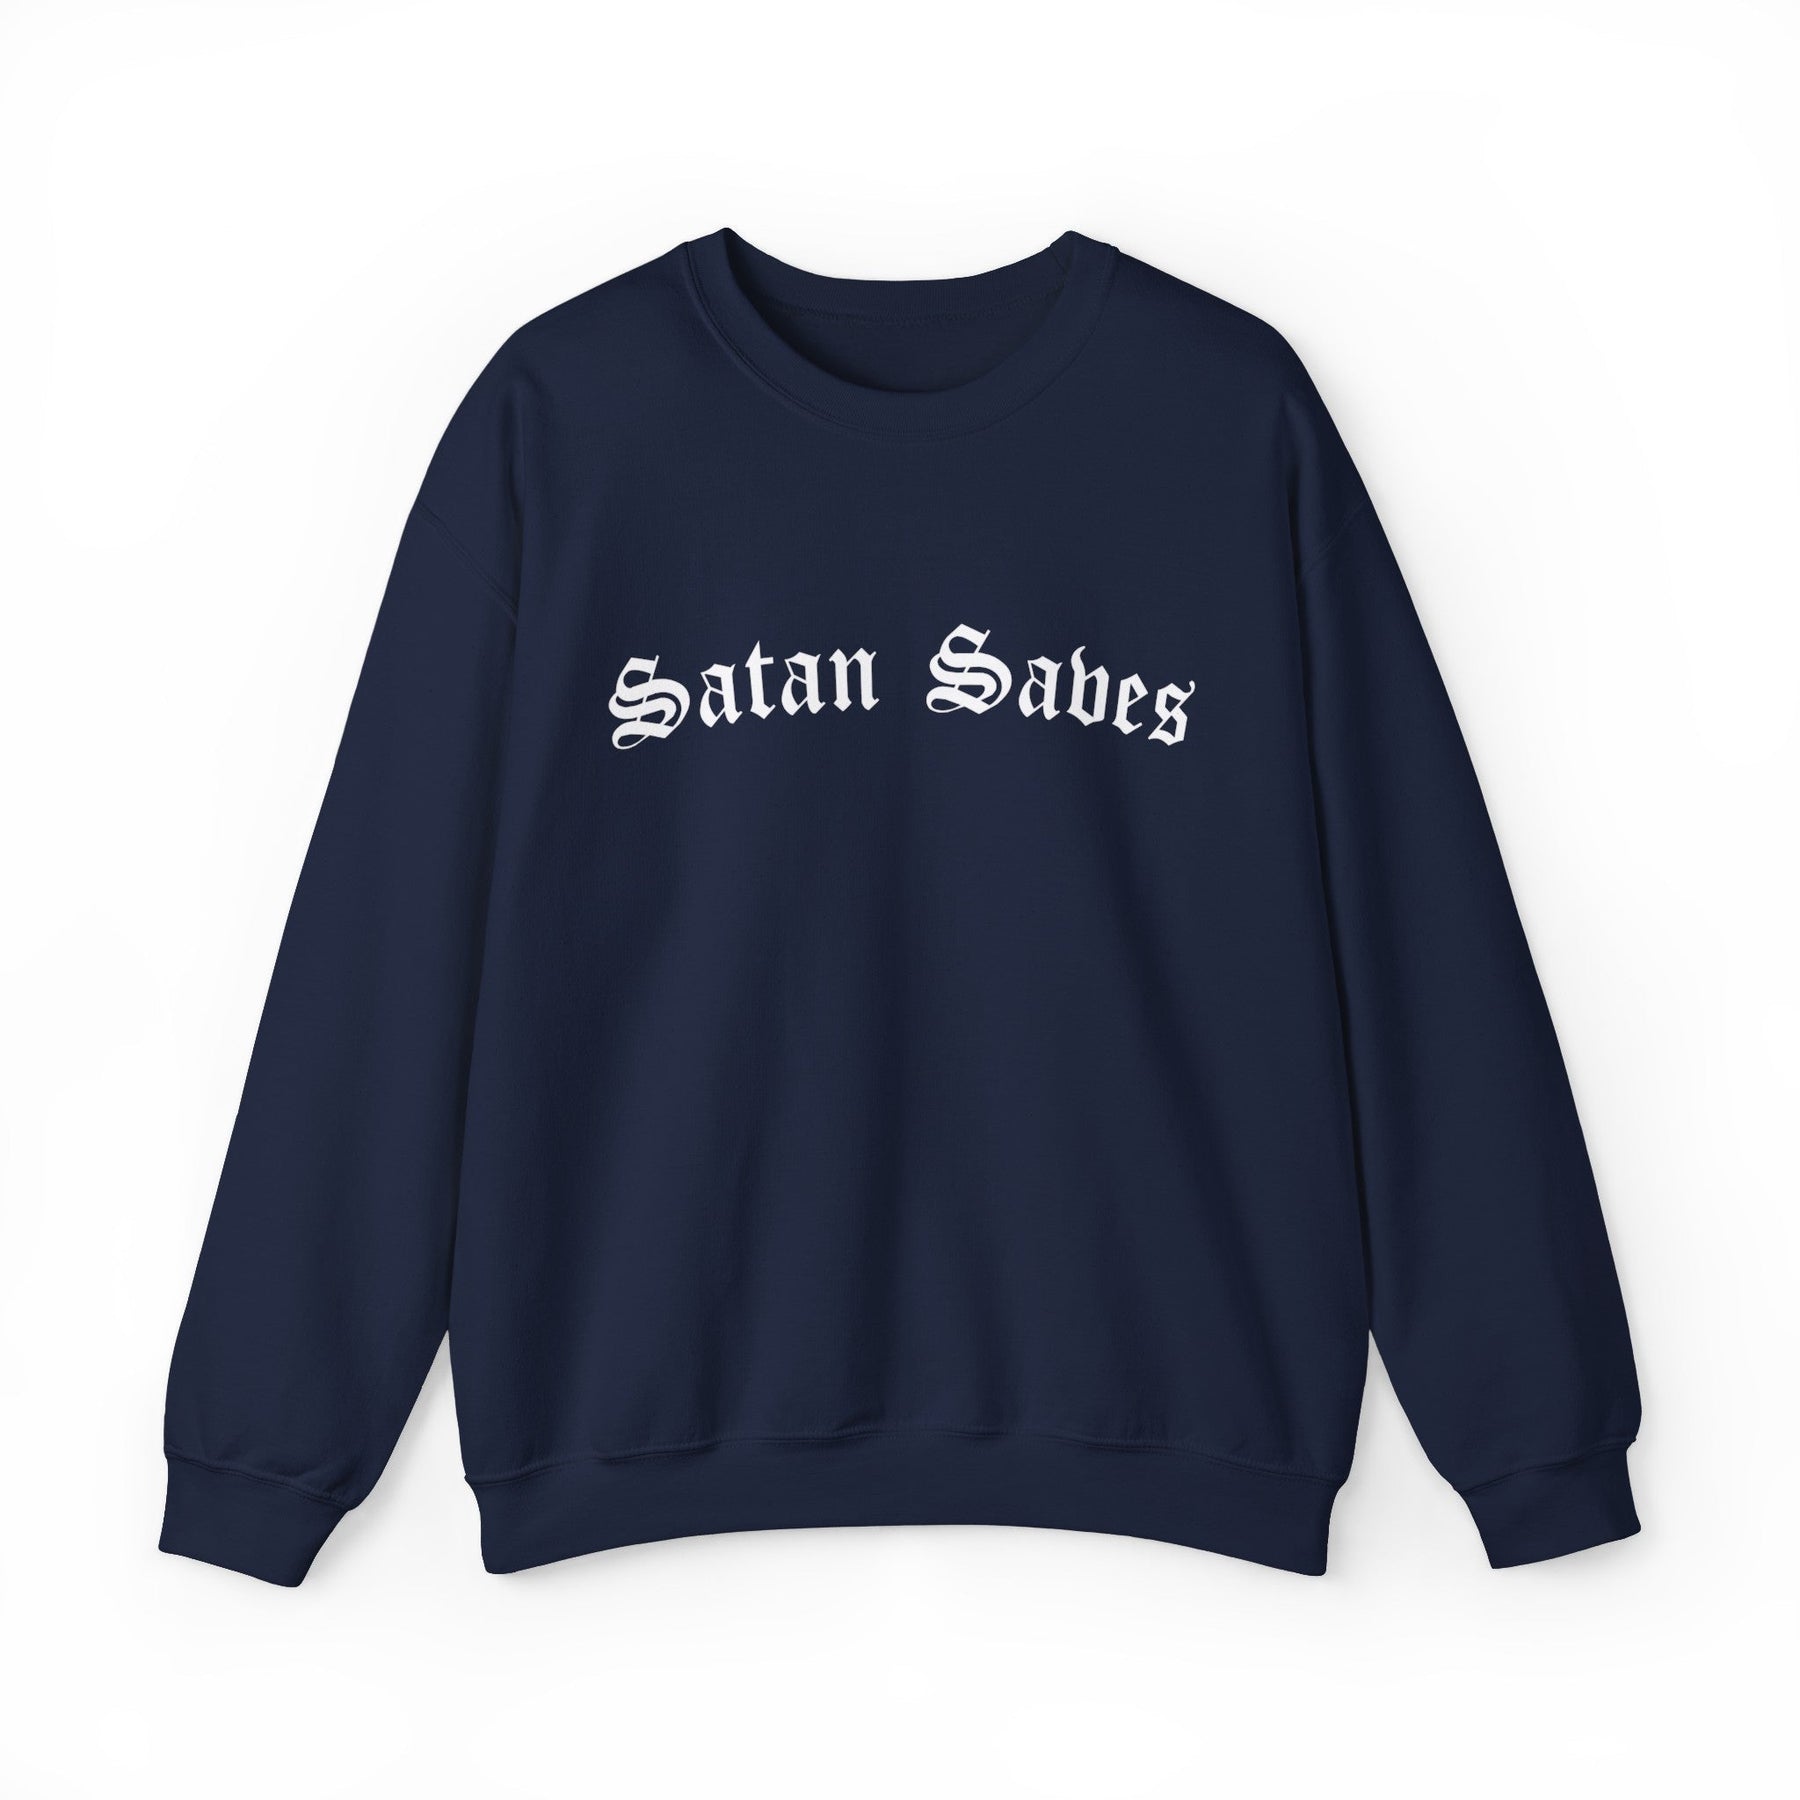 Satan Saves Gothic Crew Neck Sweatshirt - Goth Cloth Co.Sweatshirt17687845023776450411